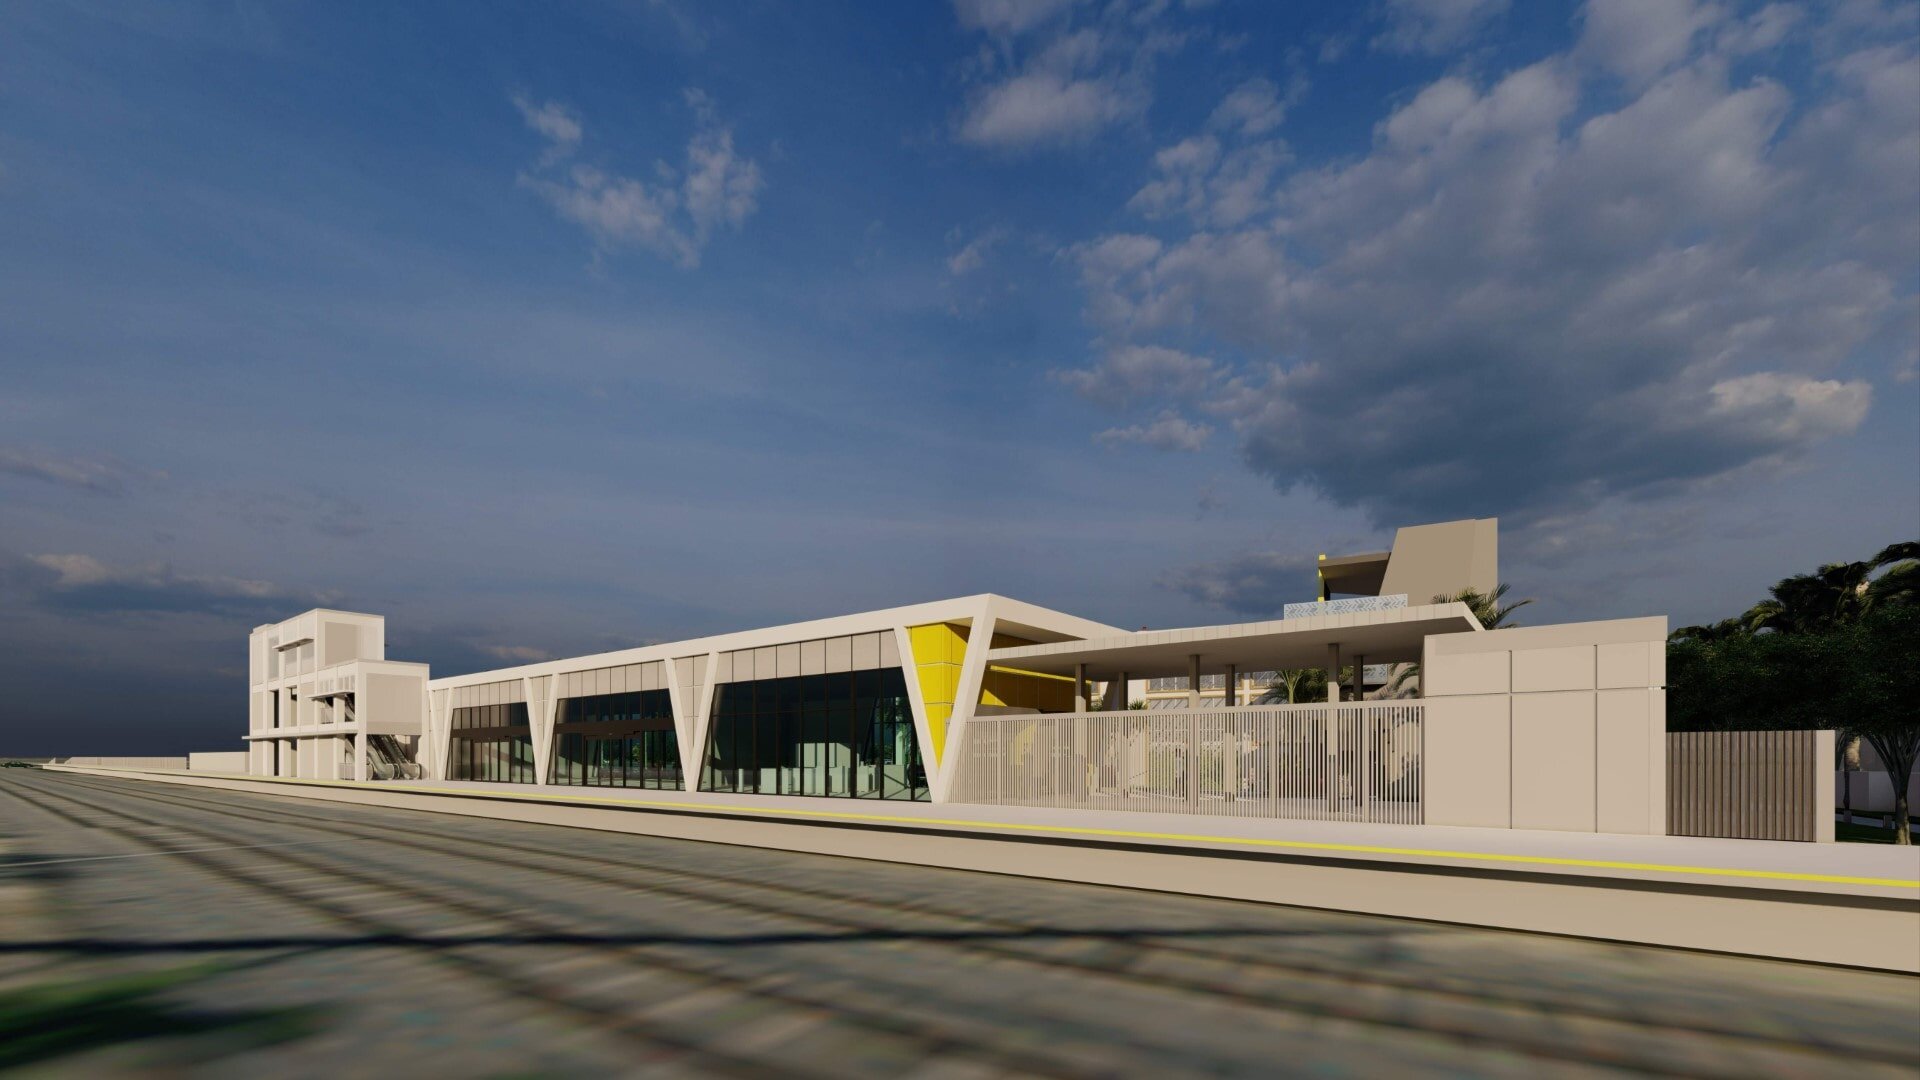 Boca Raton Station. Designed by RLC Architects.